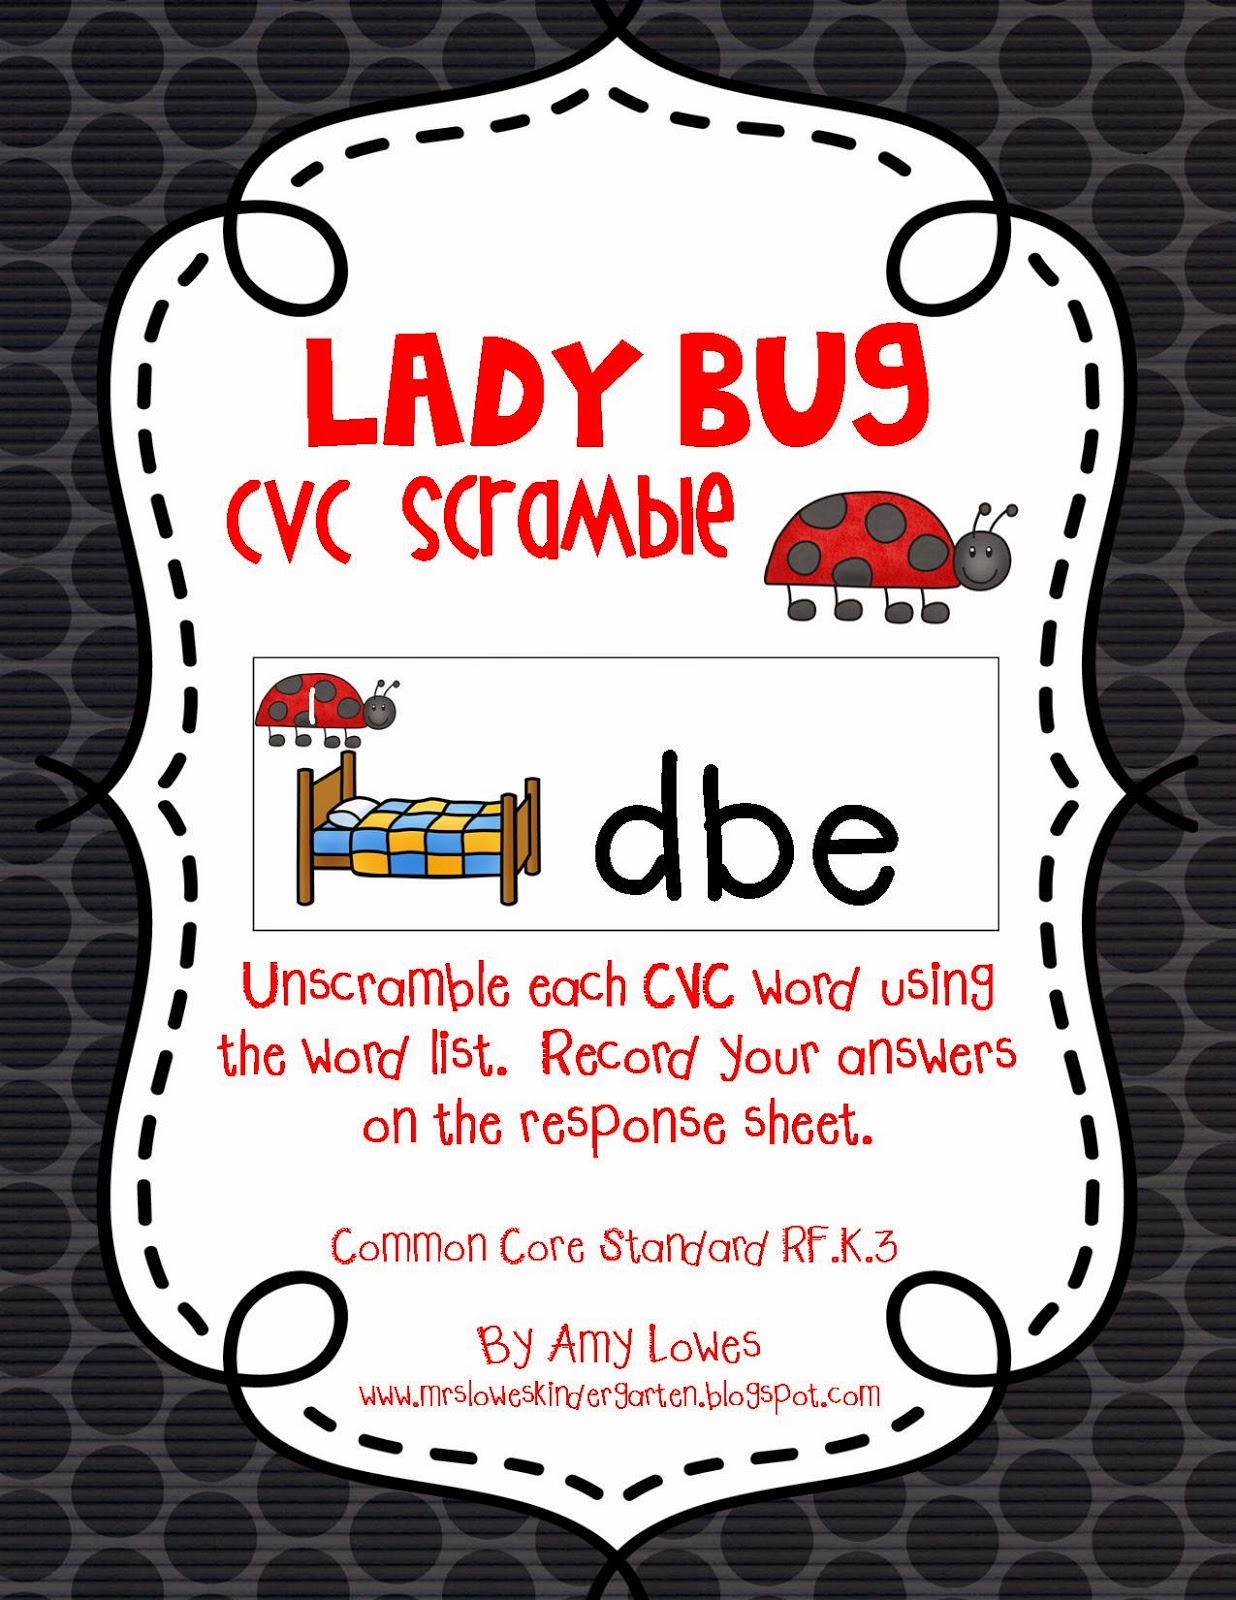 http://www.teacherspayteachers.com/Product/Lady-Bug-CVC-Scramble-1226496